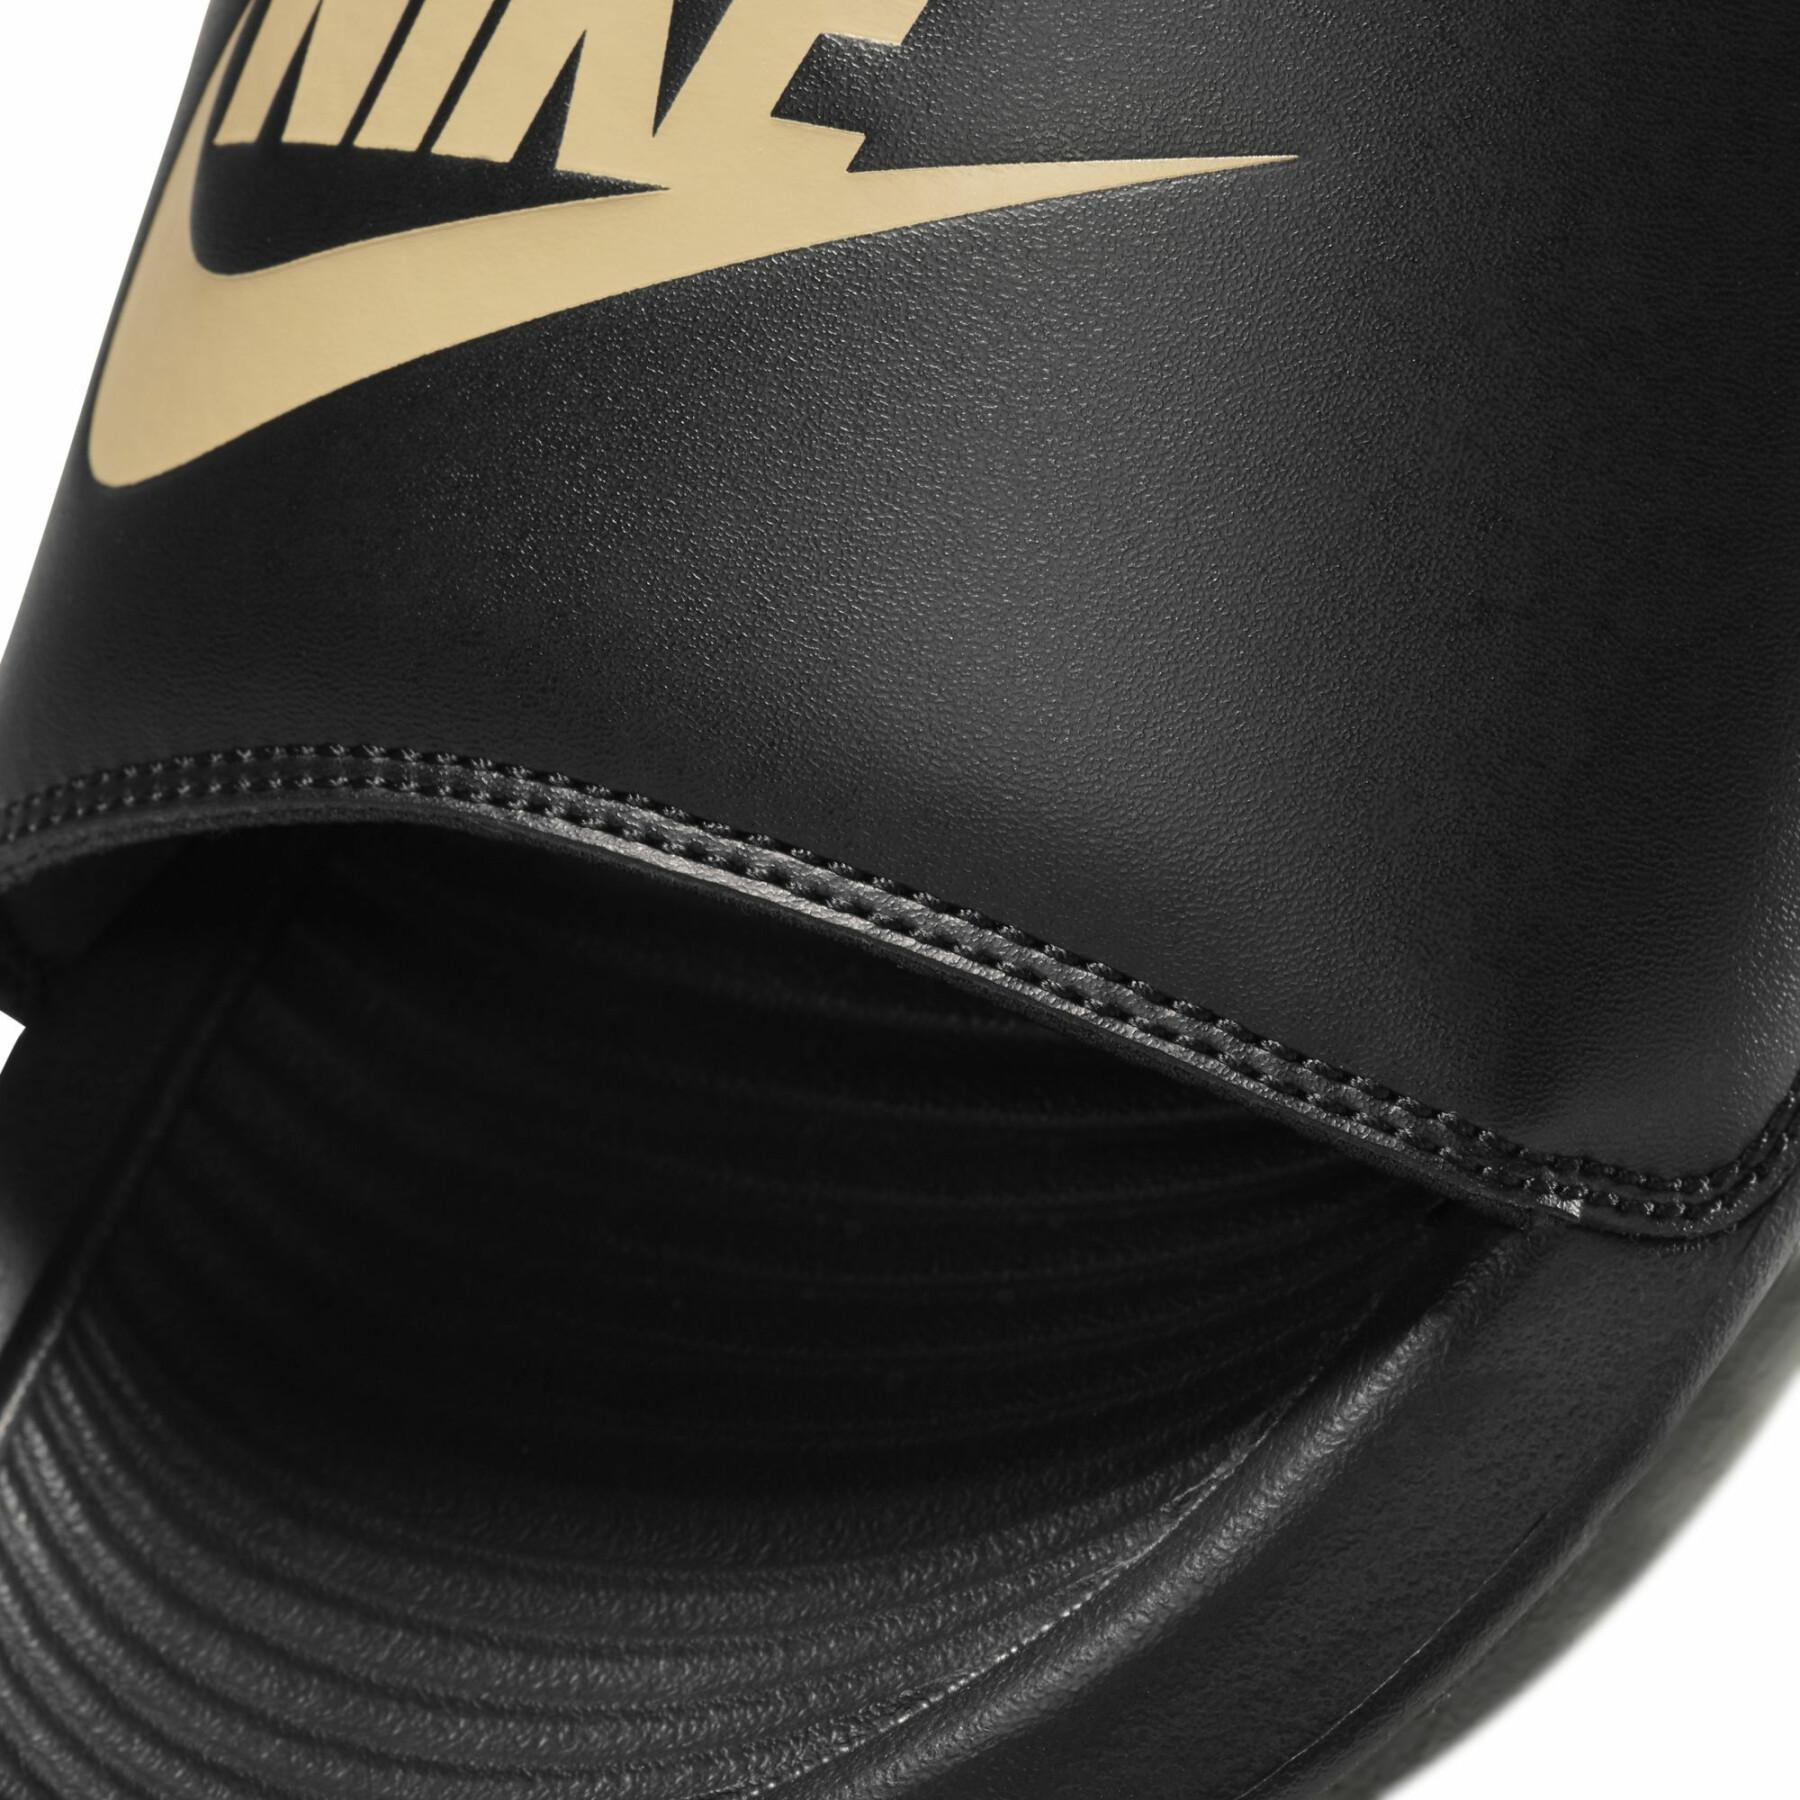 Sapatos de sapateado Nike Victori One